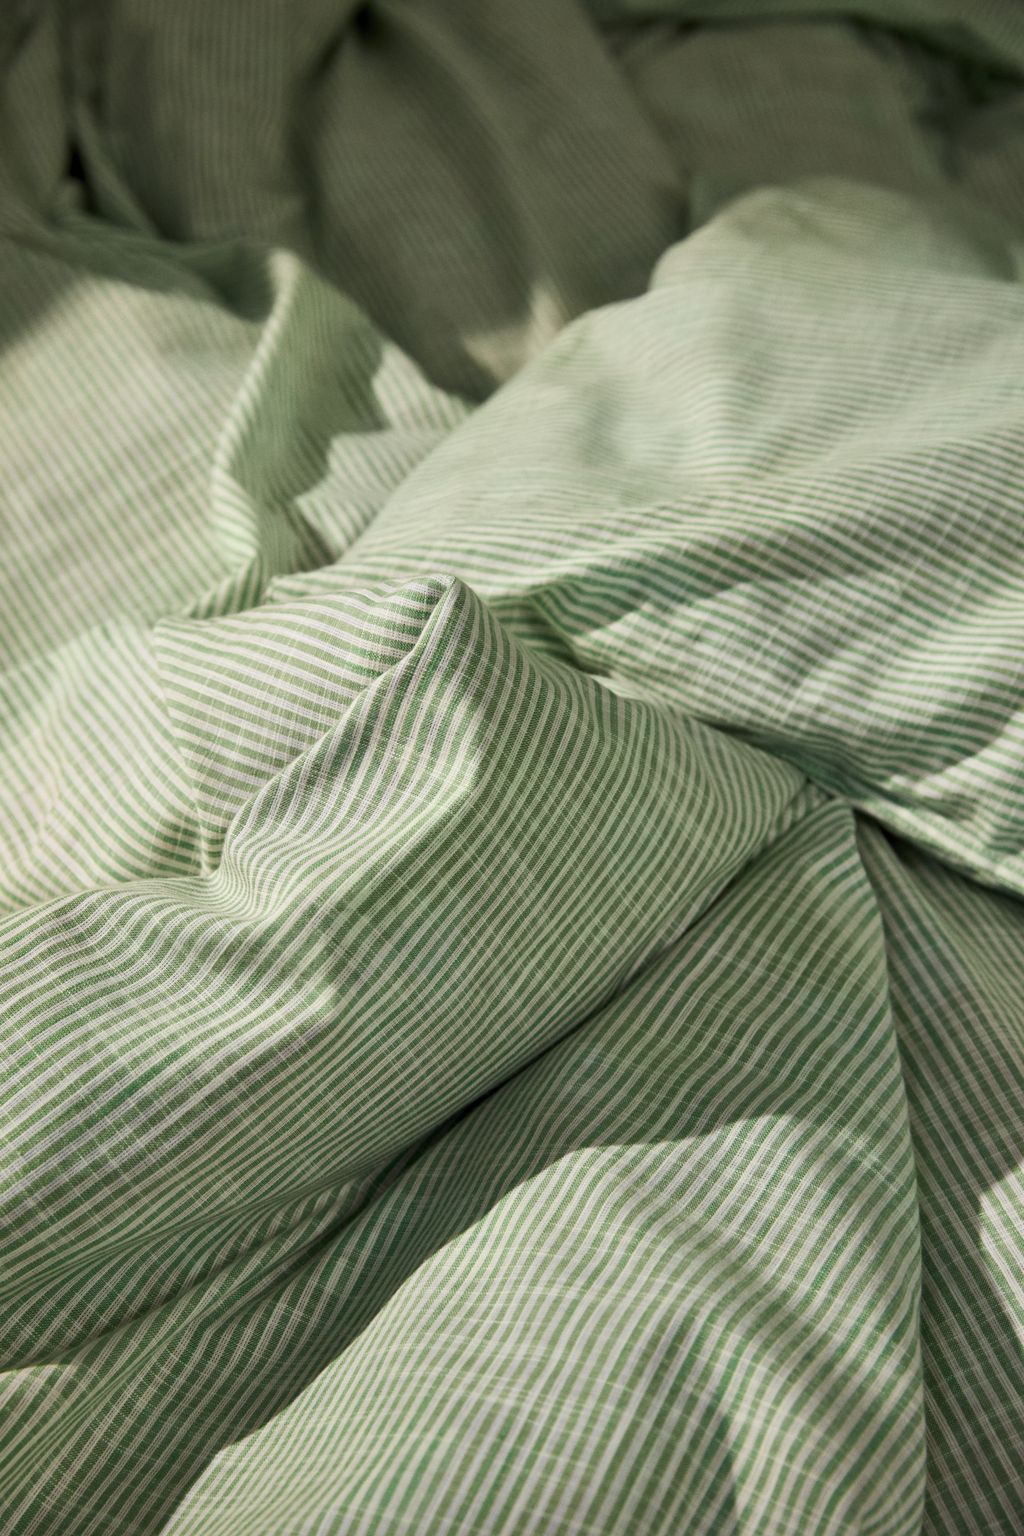 Juna monokrome linjer seng lin 140 x200 cm, grønn/hvit